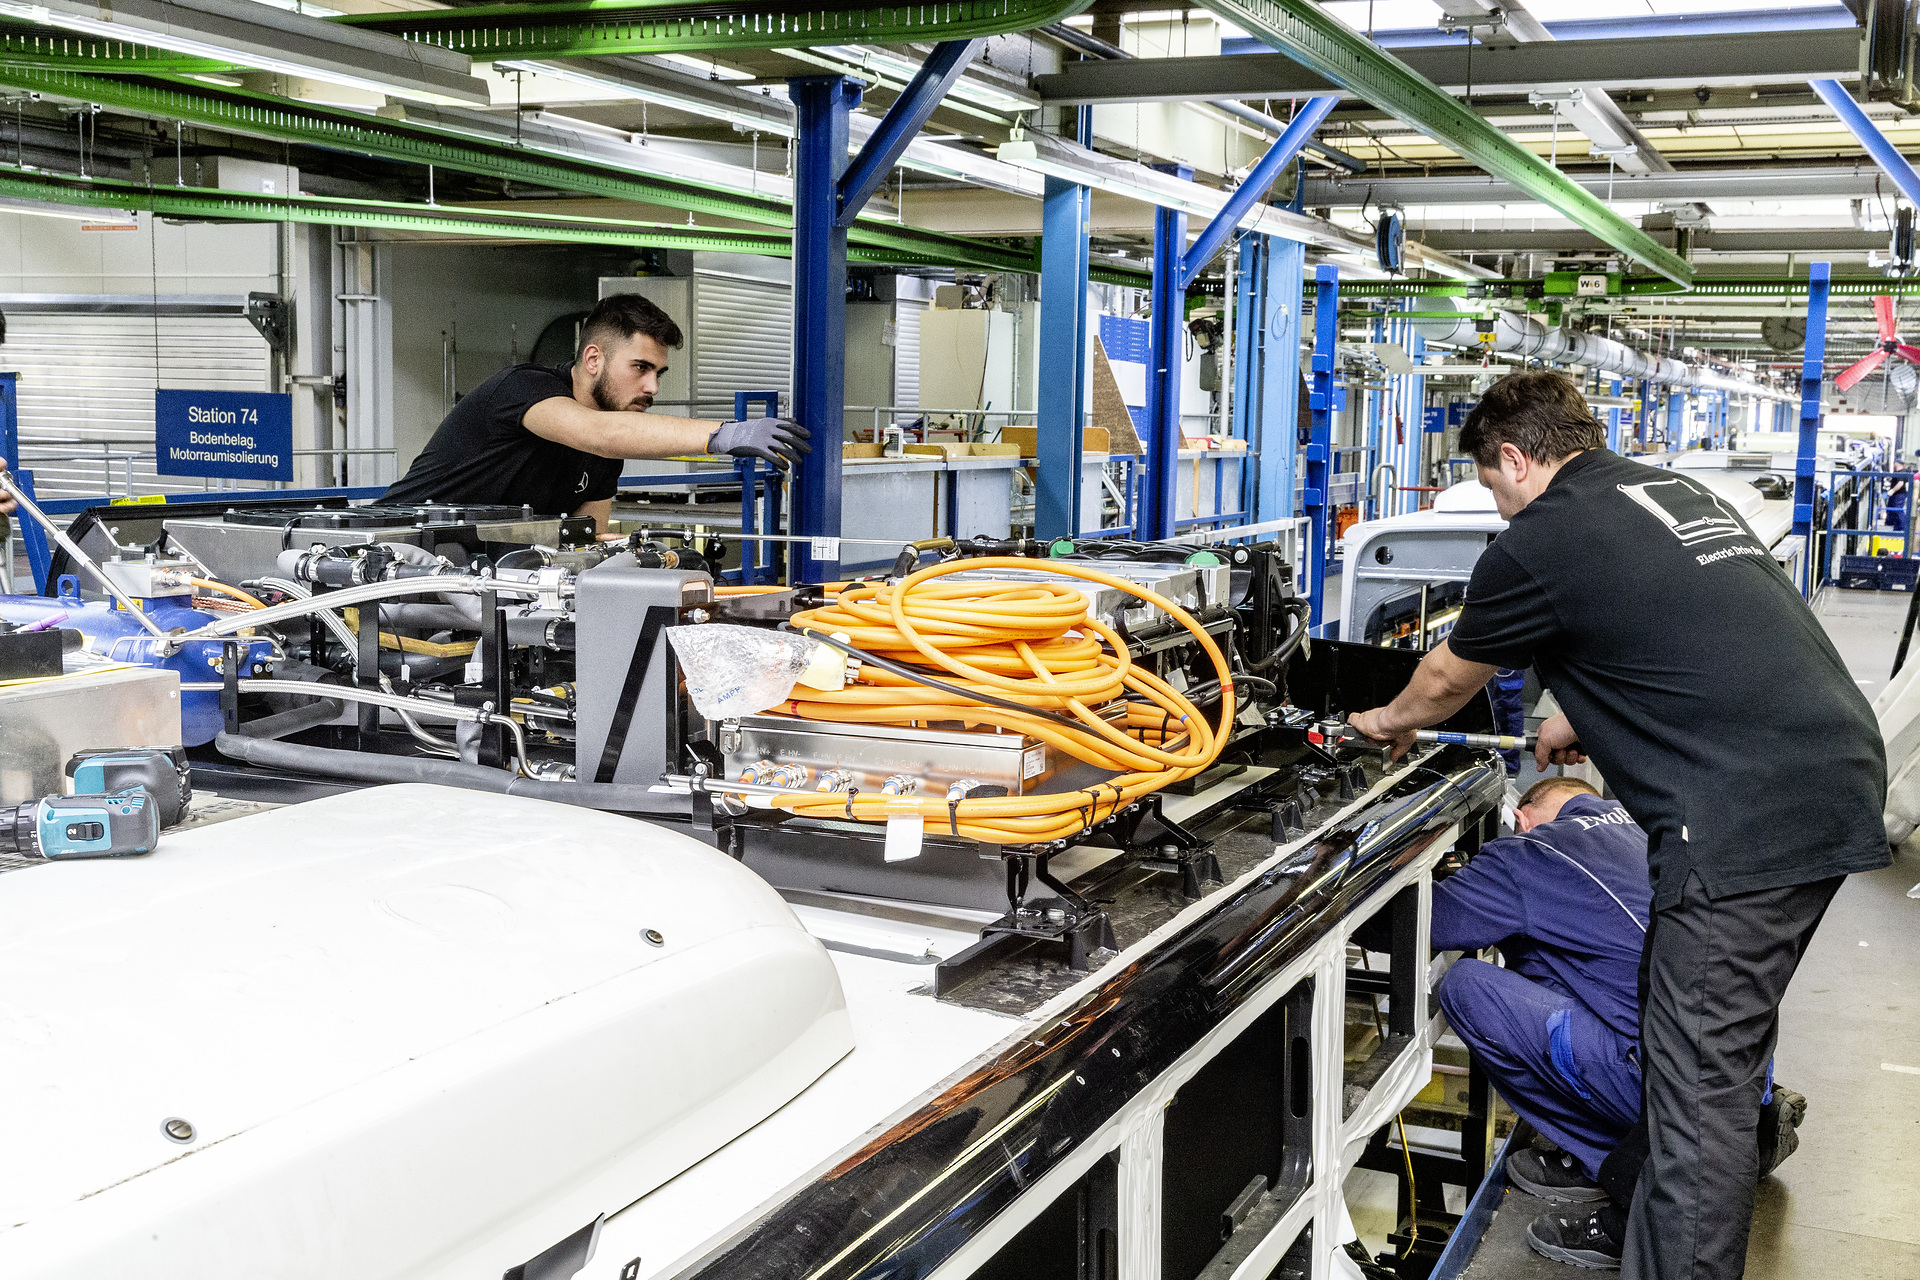 eCitaro production, Daimler AG/EvoBus Werk Mannheim